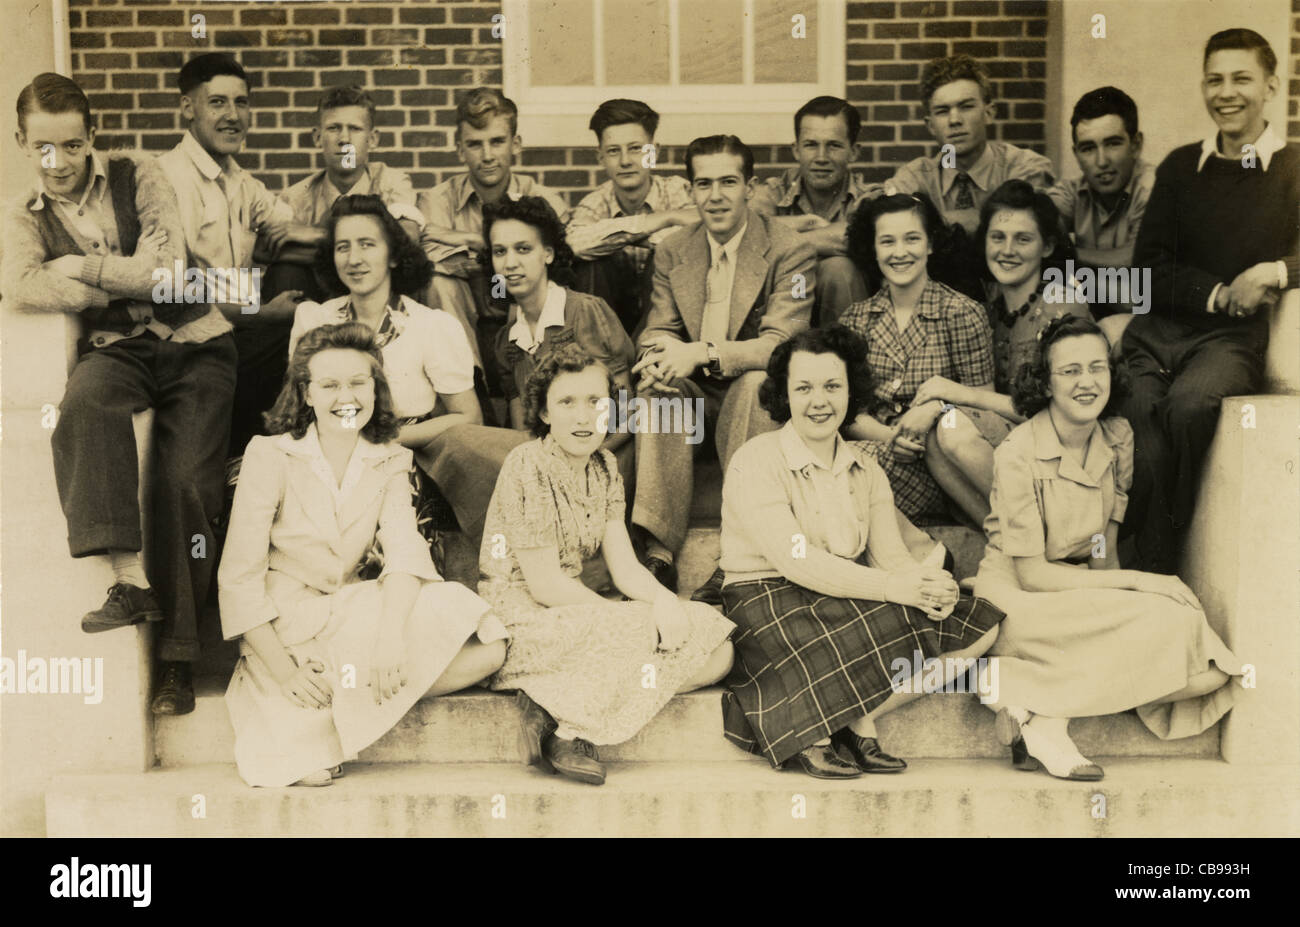 Circa 1940s photo of high school students. Stock Photo